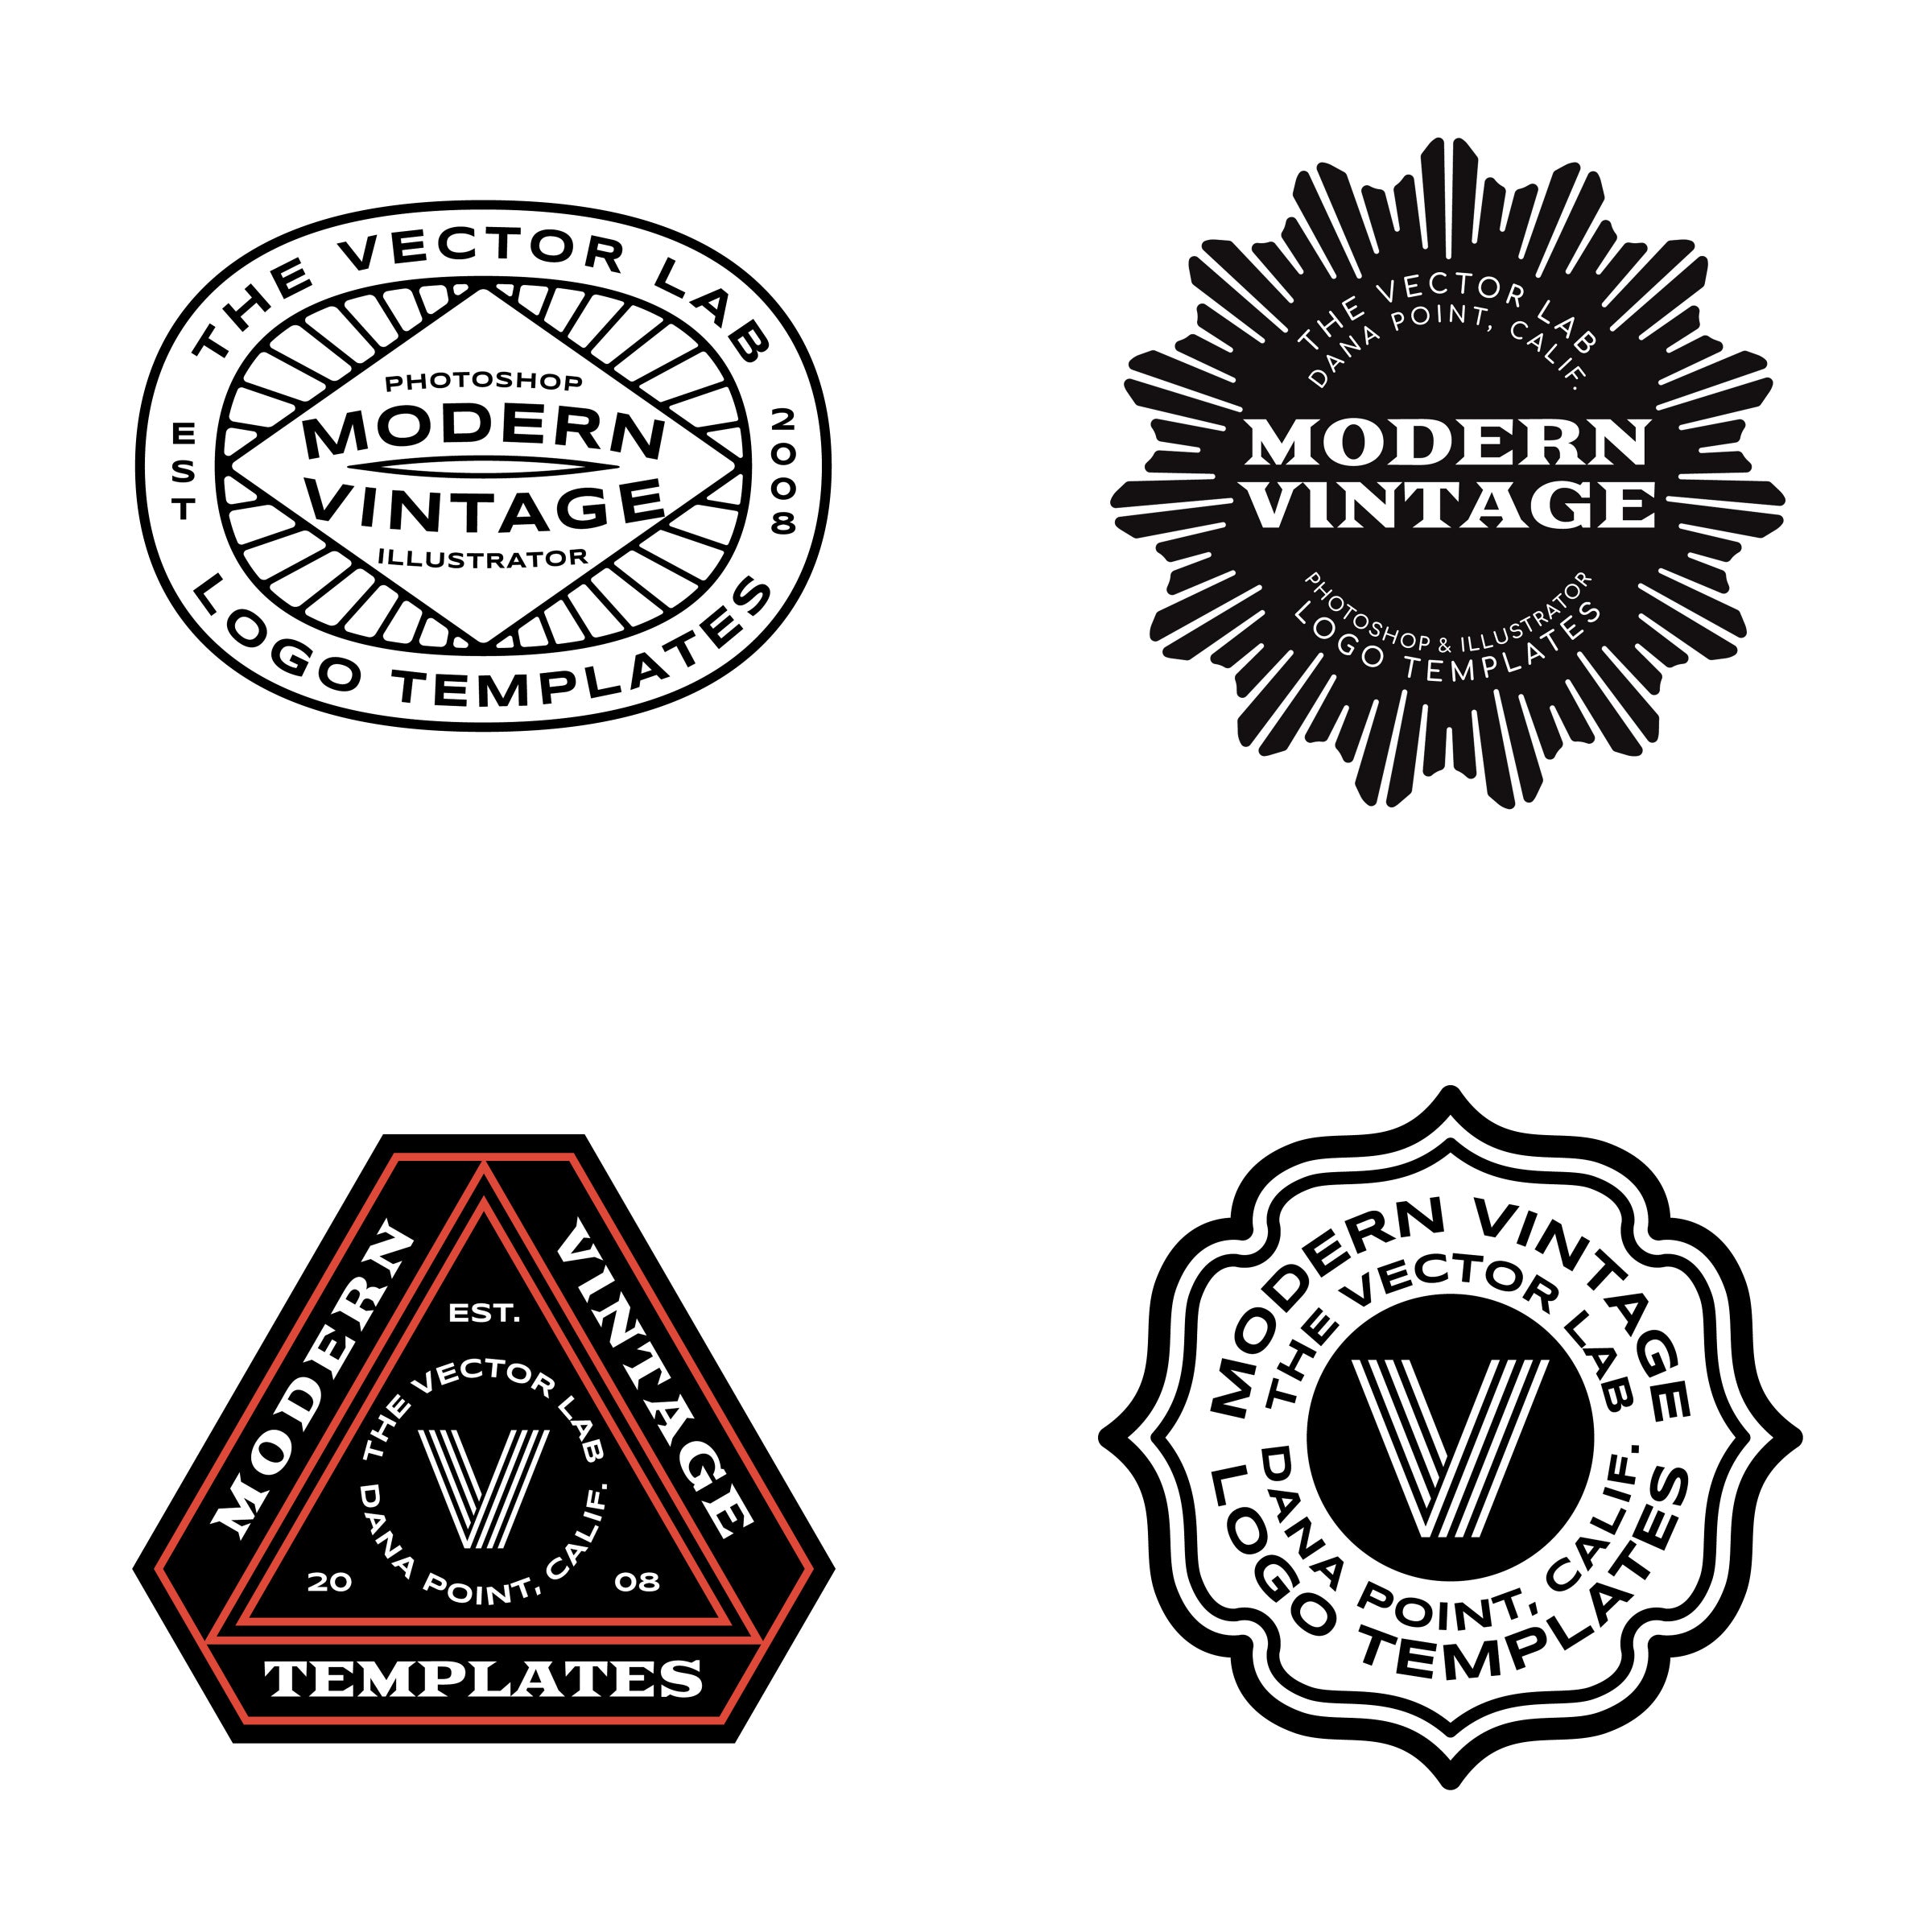 vintage logo designs